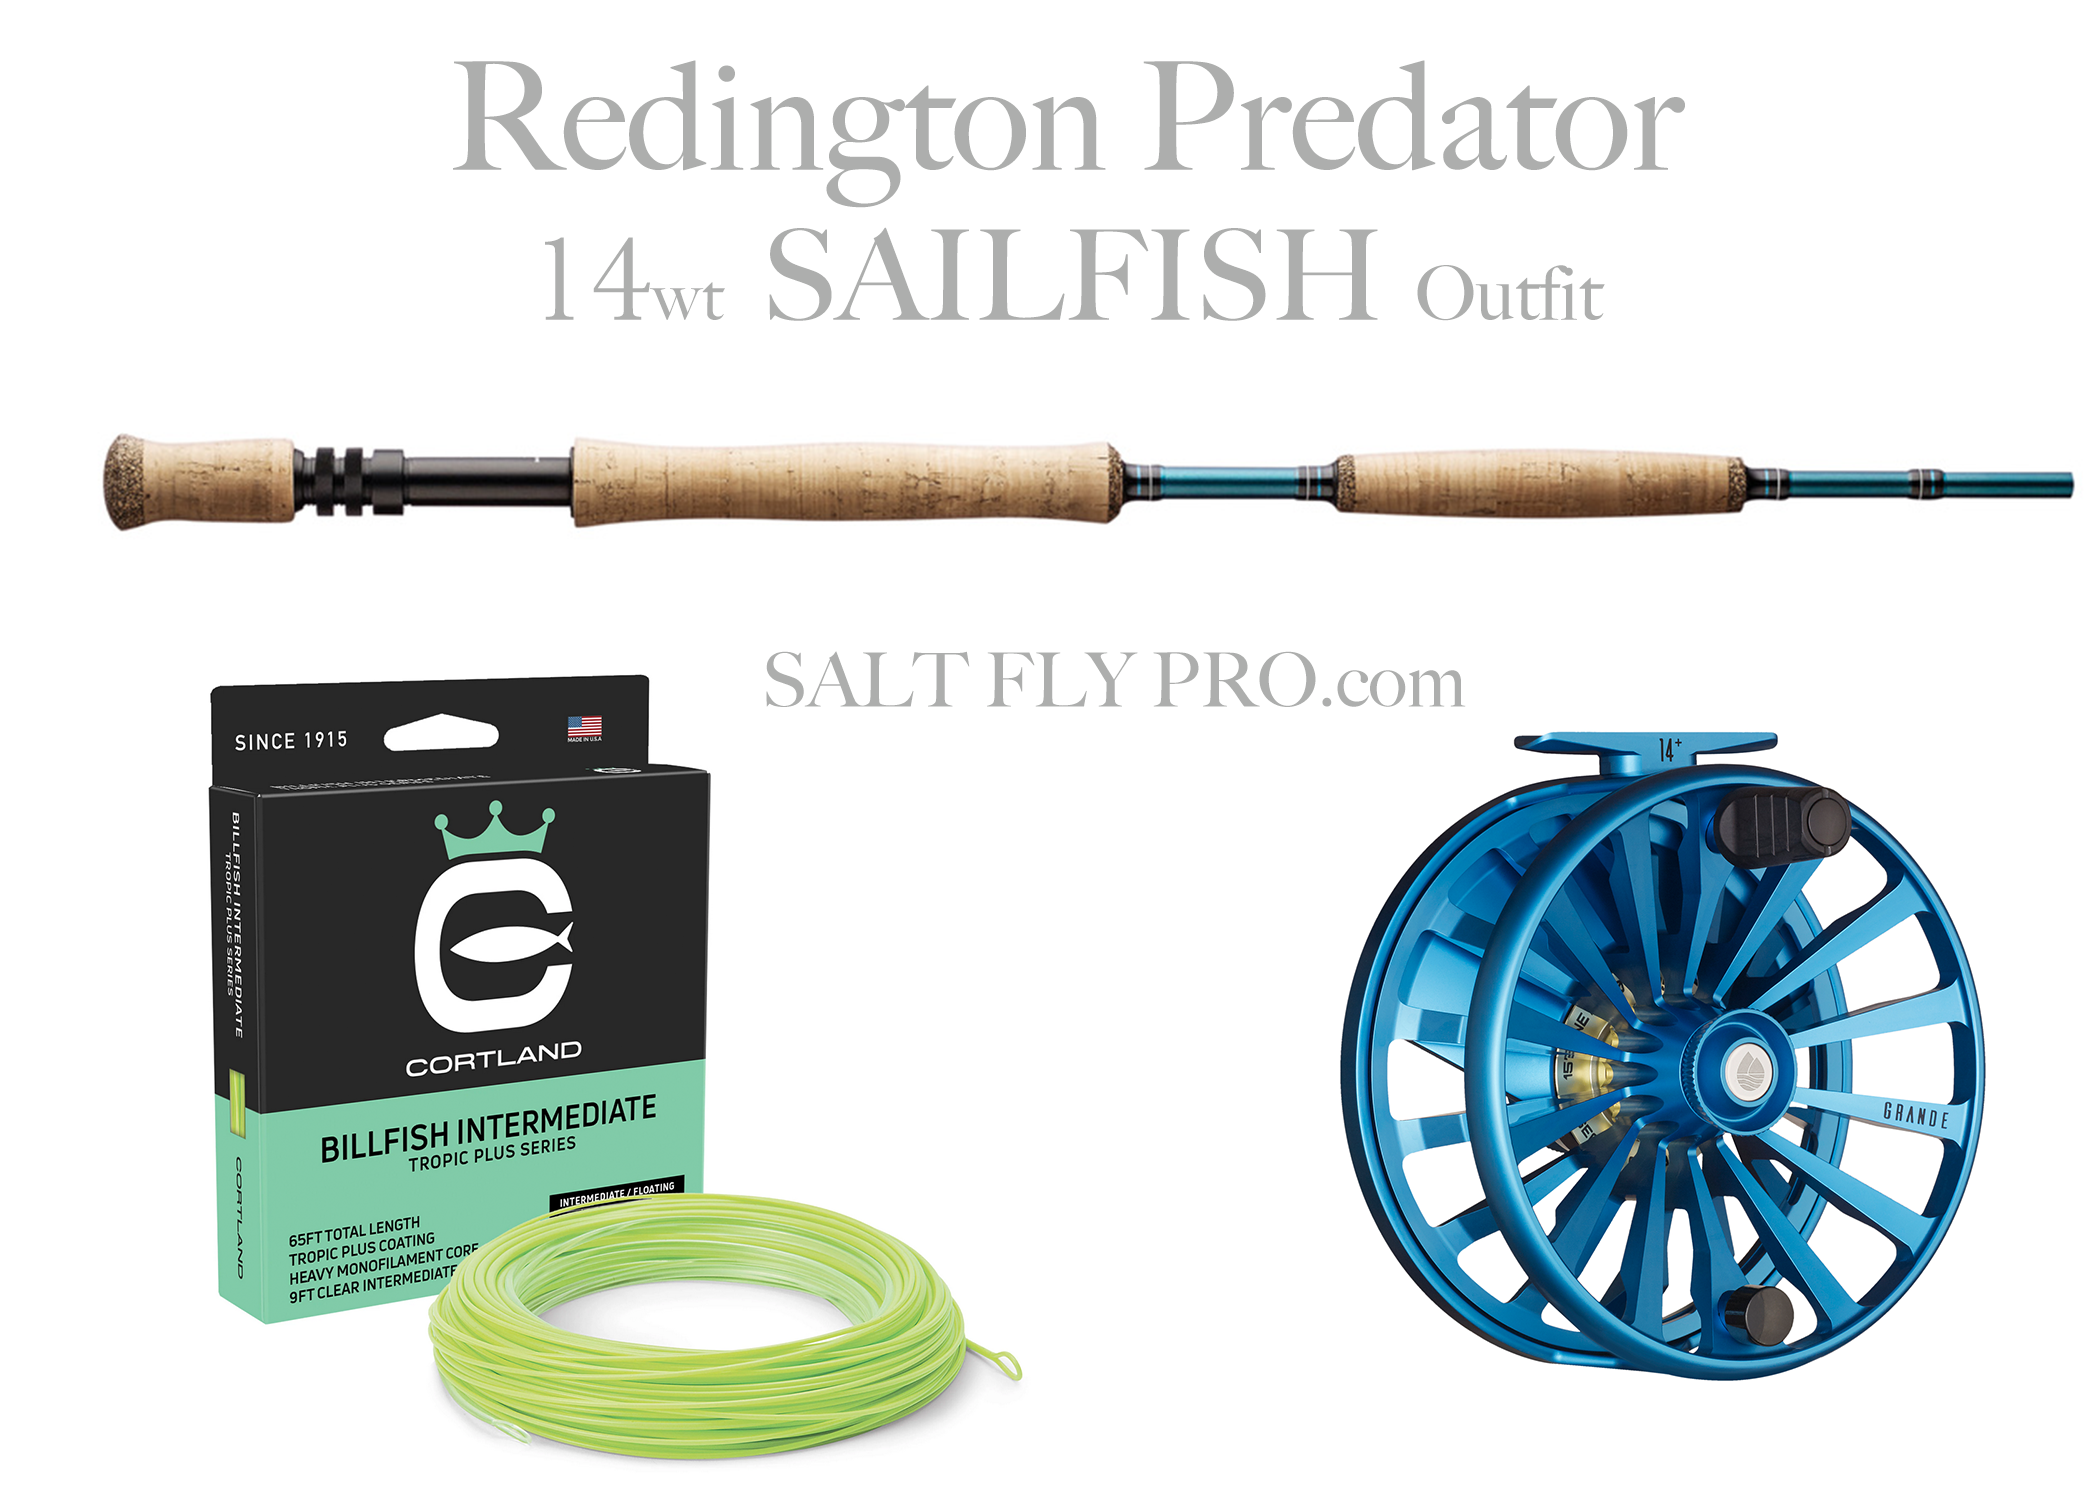 Redington Predator 14wt Fly Rod SAILFISH Outfit 14wt Fly Rod & 14+ Reel - NEW!